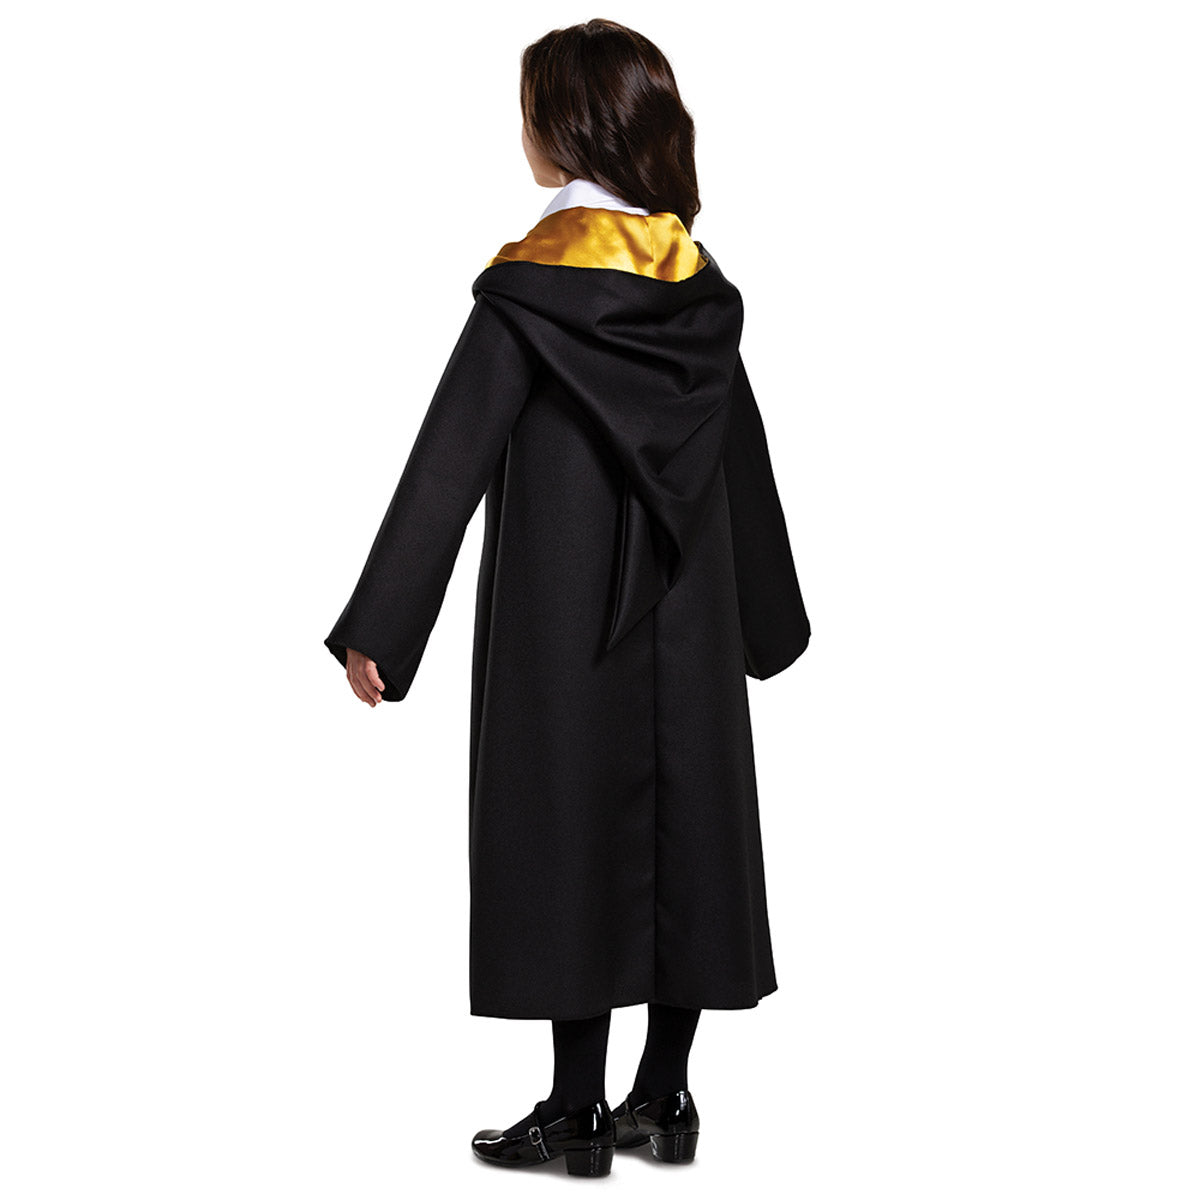 Hogwarts Robe Classic Disguise 107809